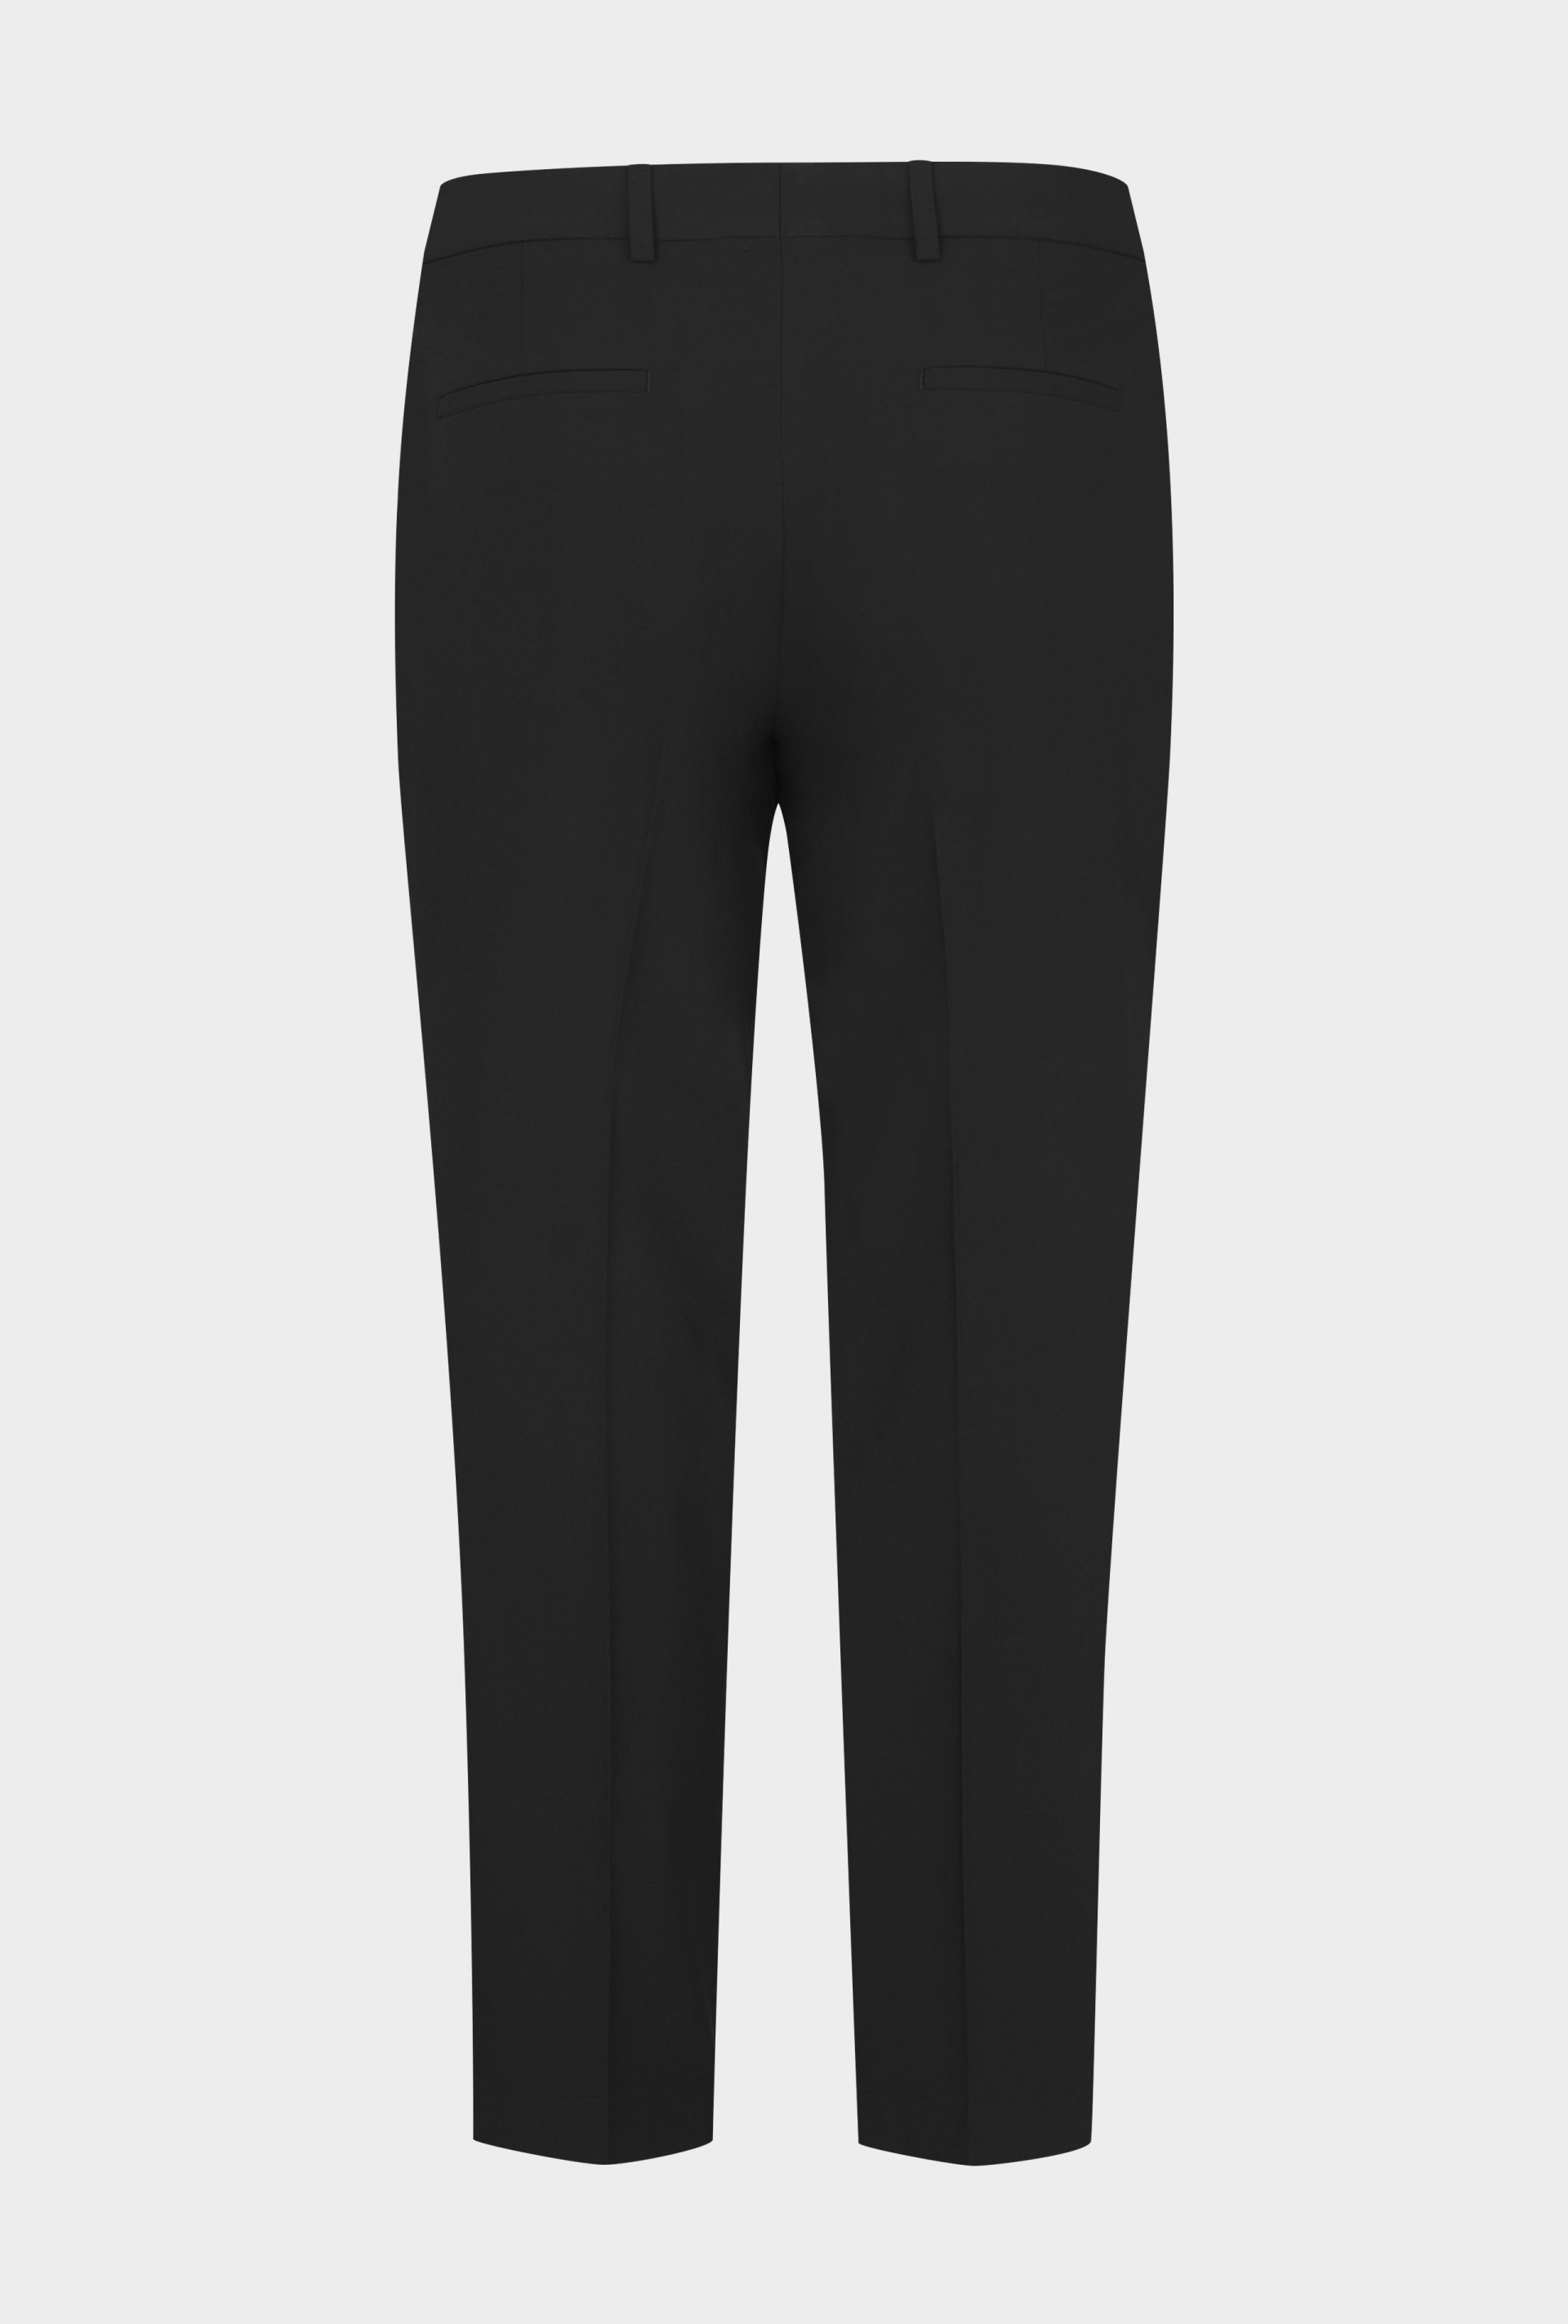 Ladies trousers Klara | Ted Bernhardtz – At Work collection shop